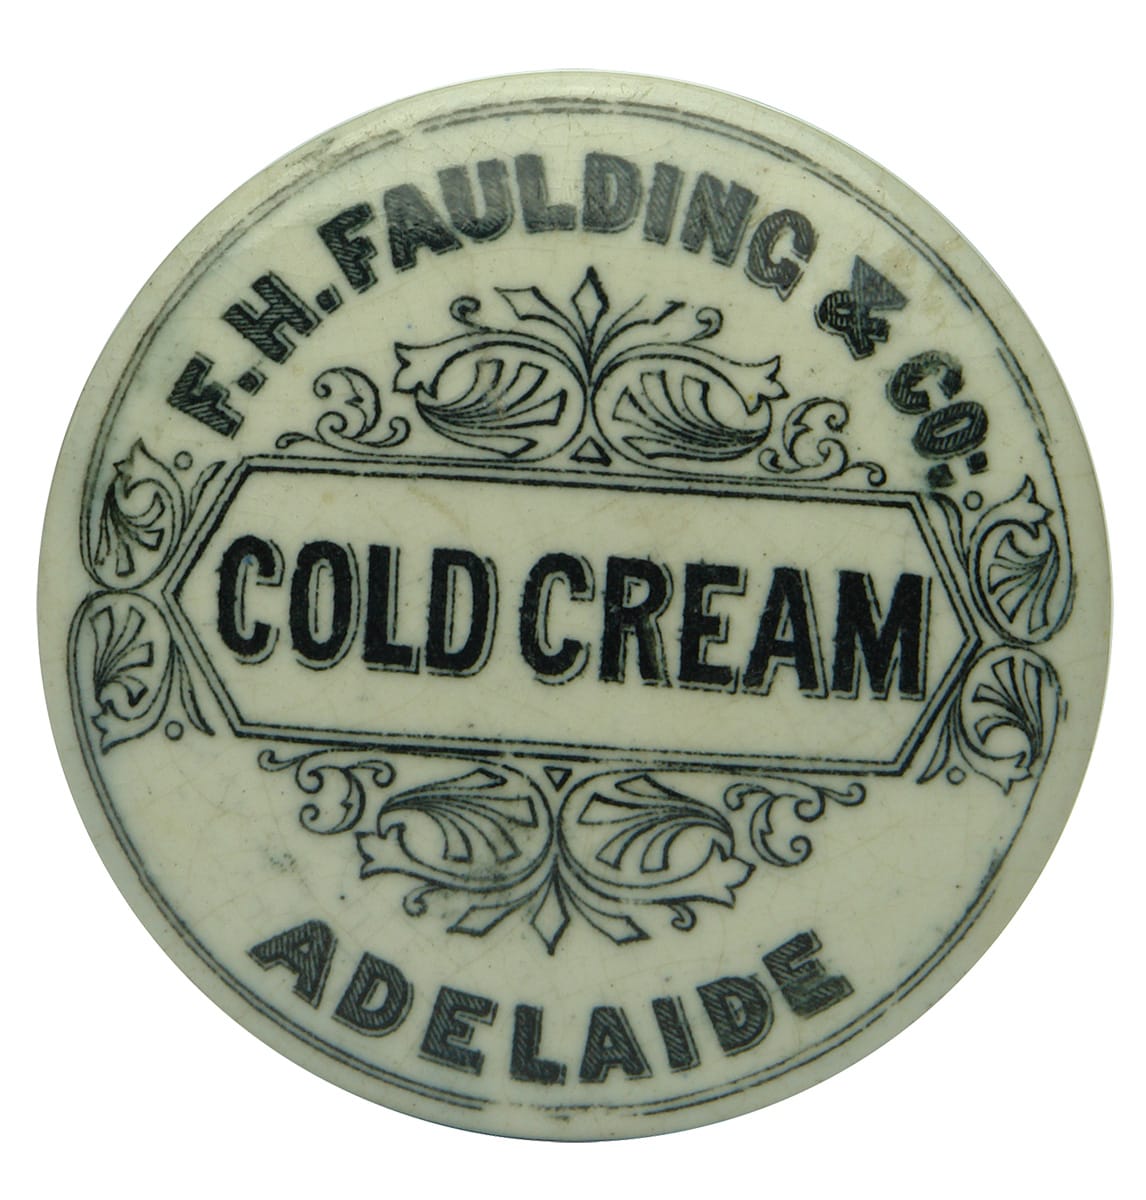 Faulding Cold Cream Adelaide Pot Lid